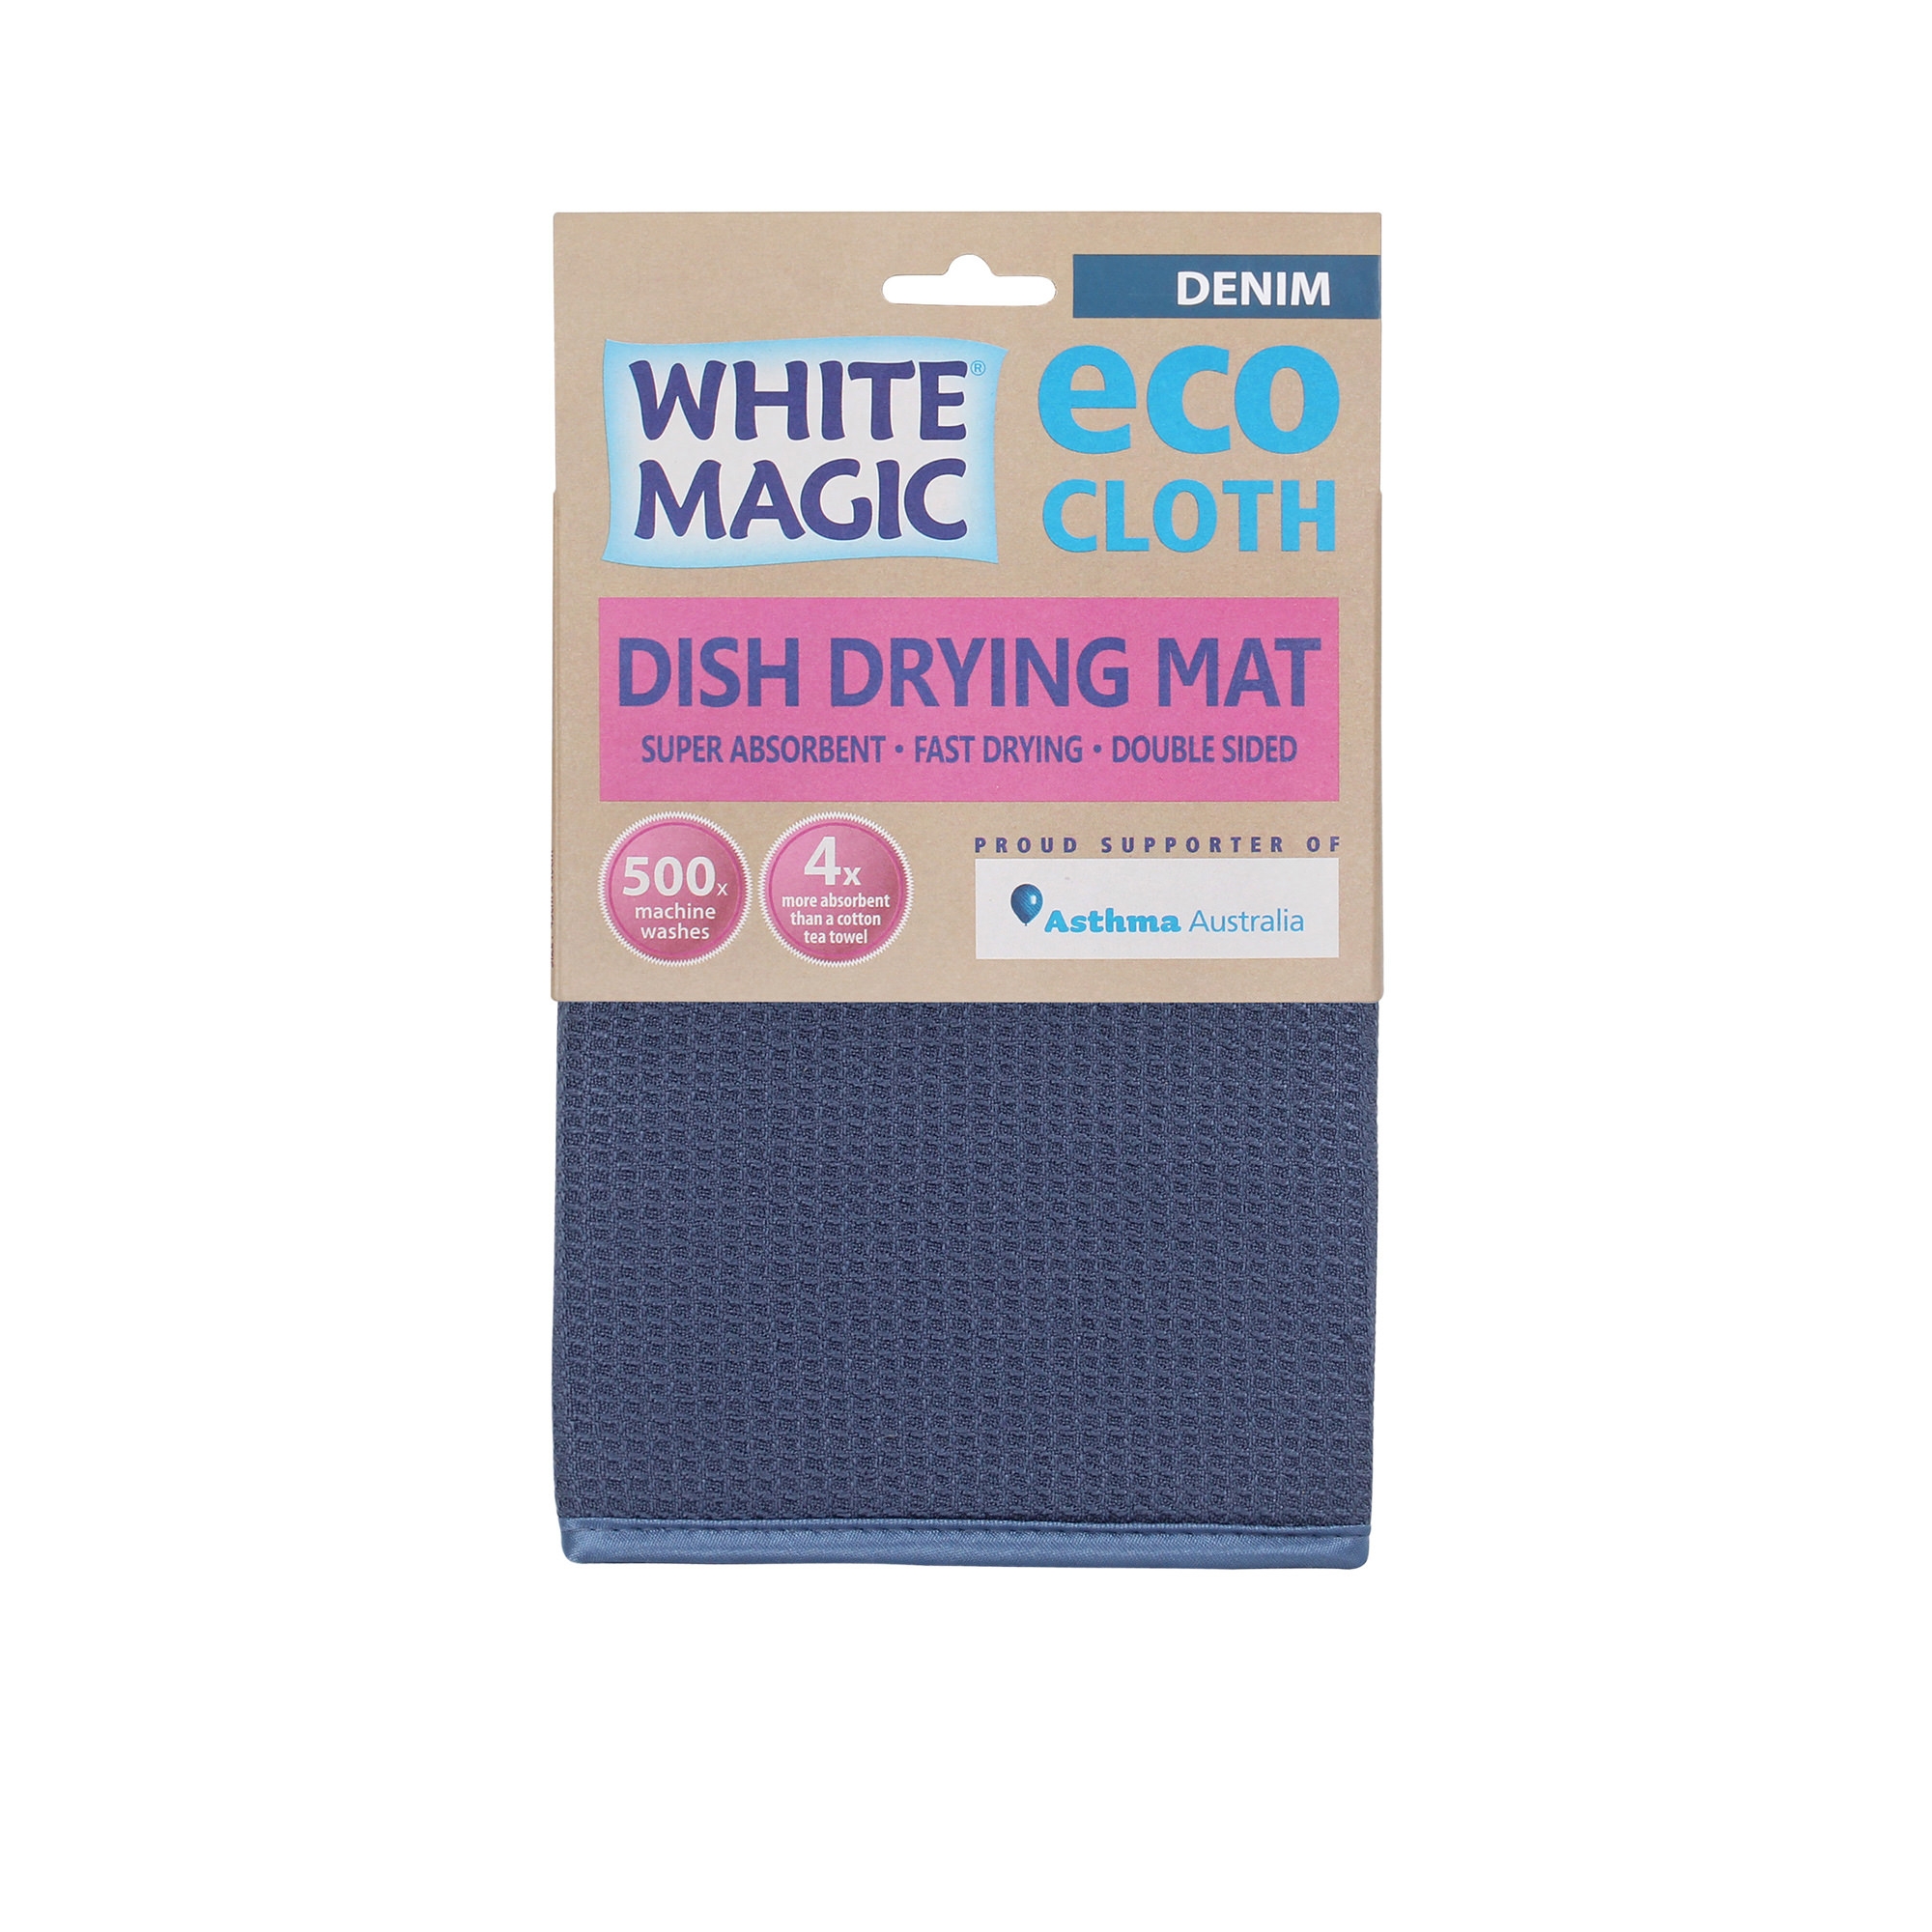 White Magic Eco Cloth Dish Drying Mat Denim Image 2